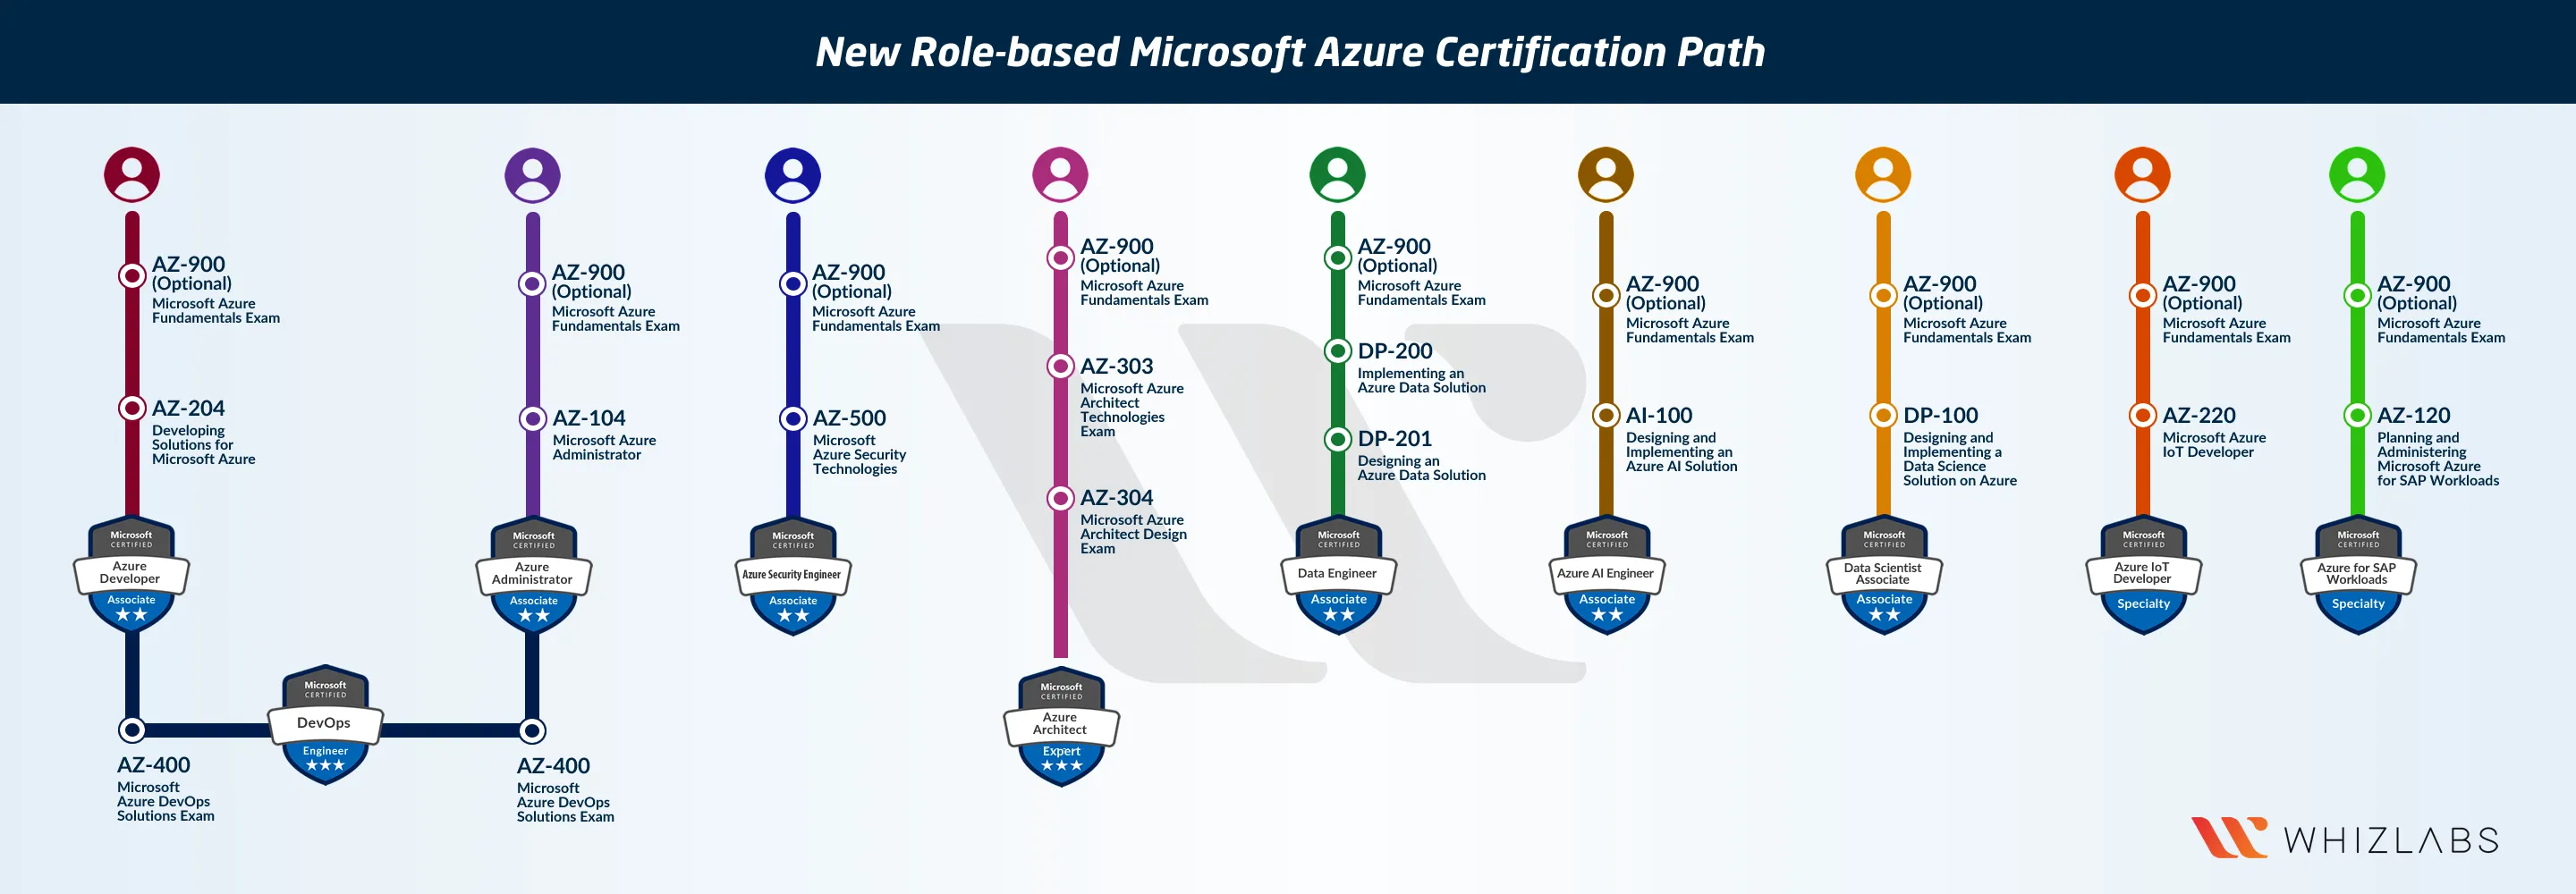 azure-certification-path-2020